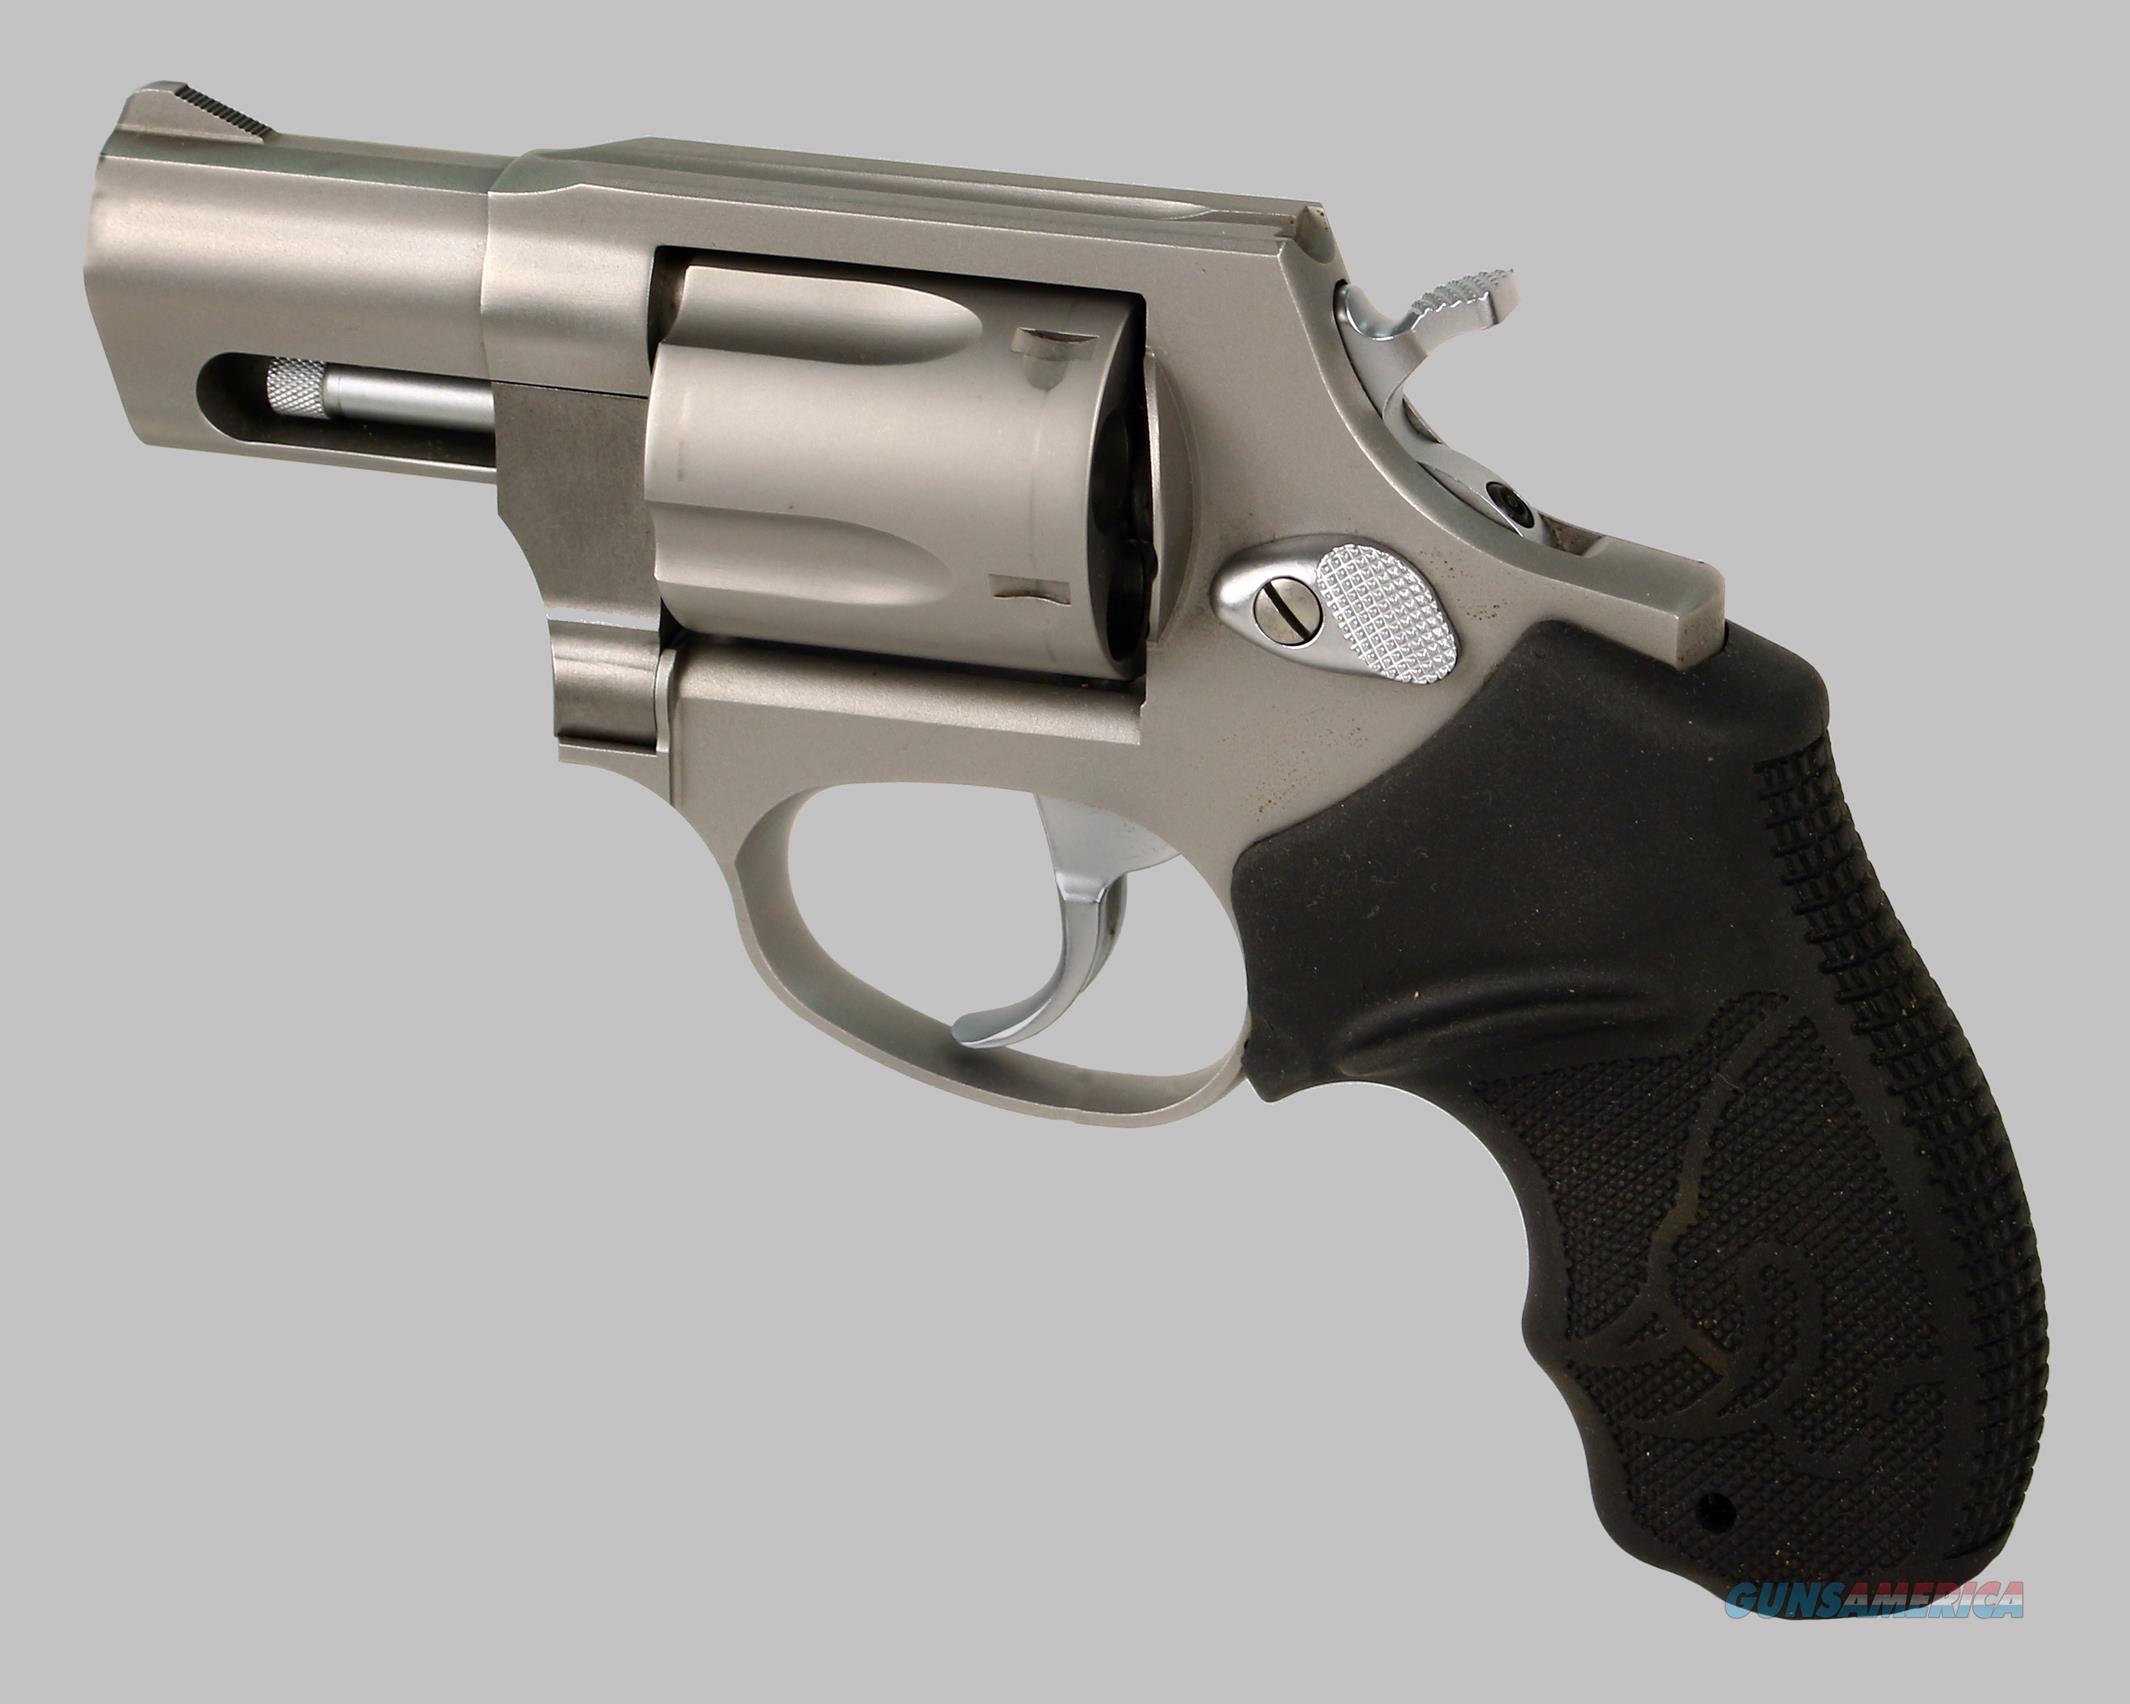 Taurus 85 Revolver for sale at Gunsamerica.com: 971921994